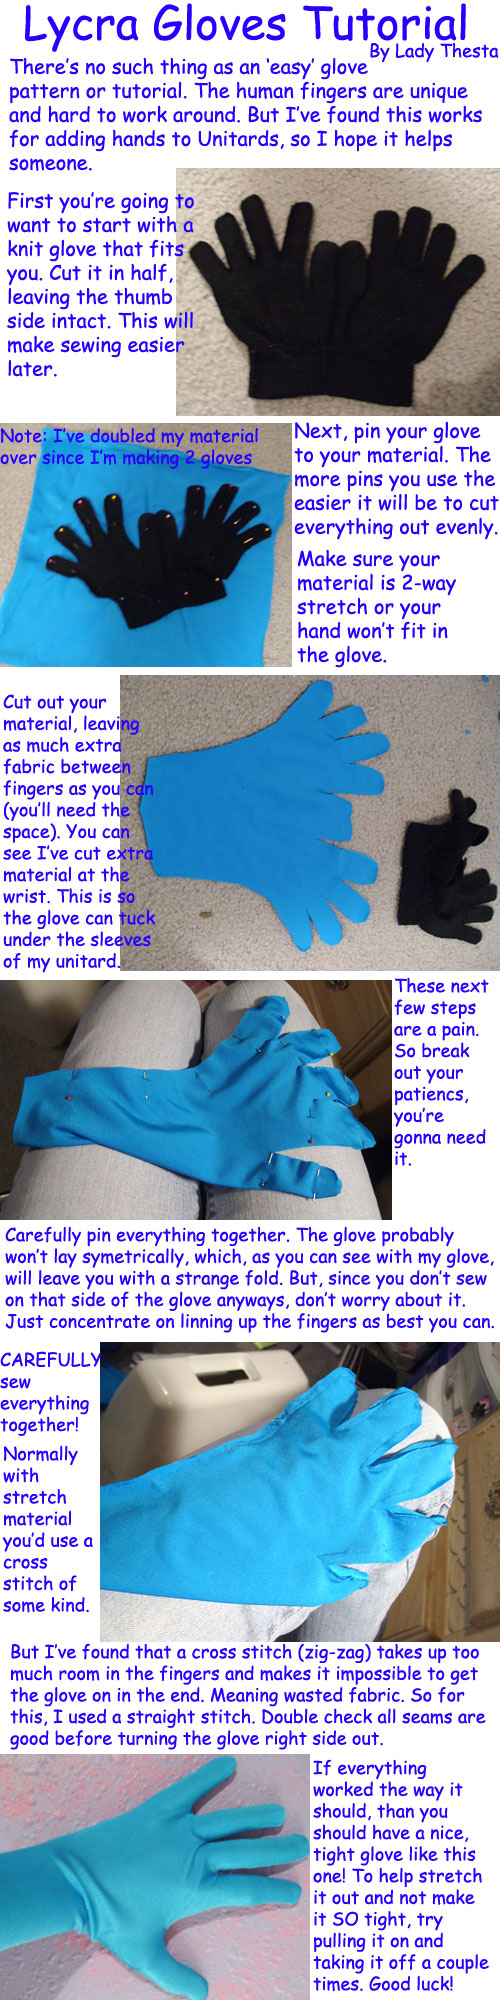 Lycra Glove Sewing Tutorial